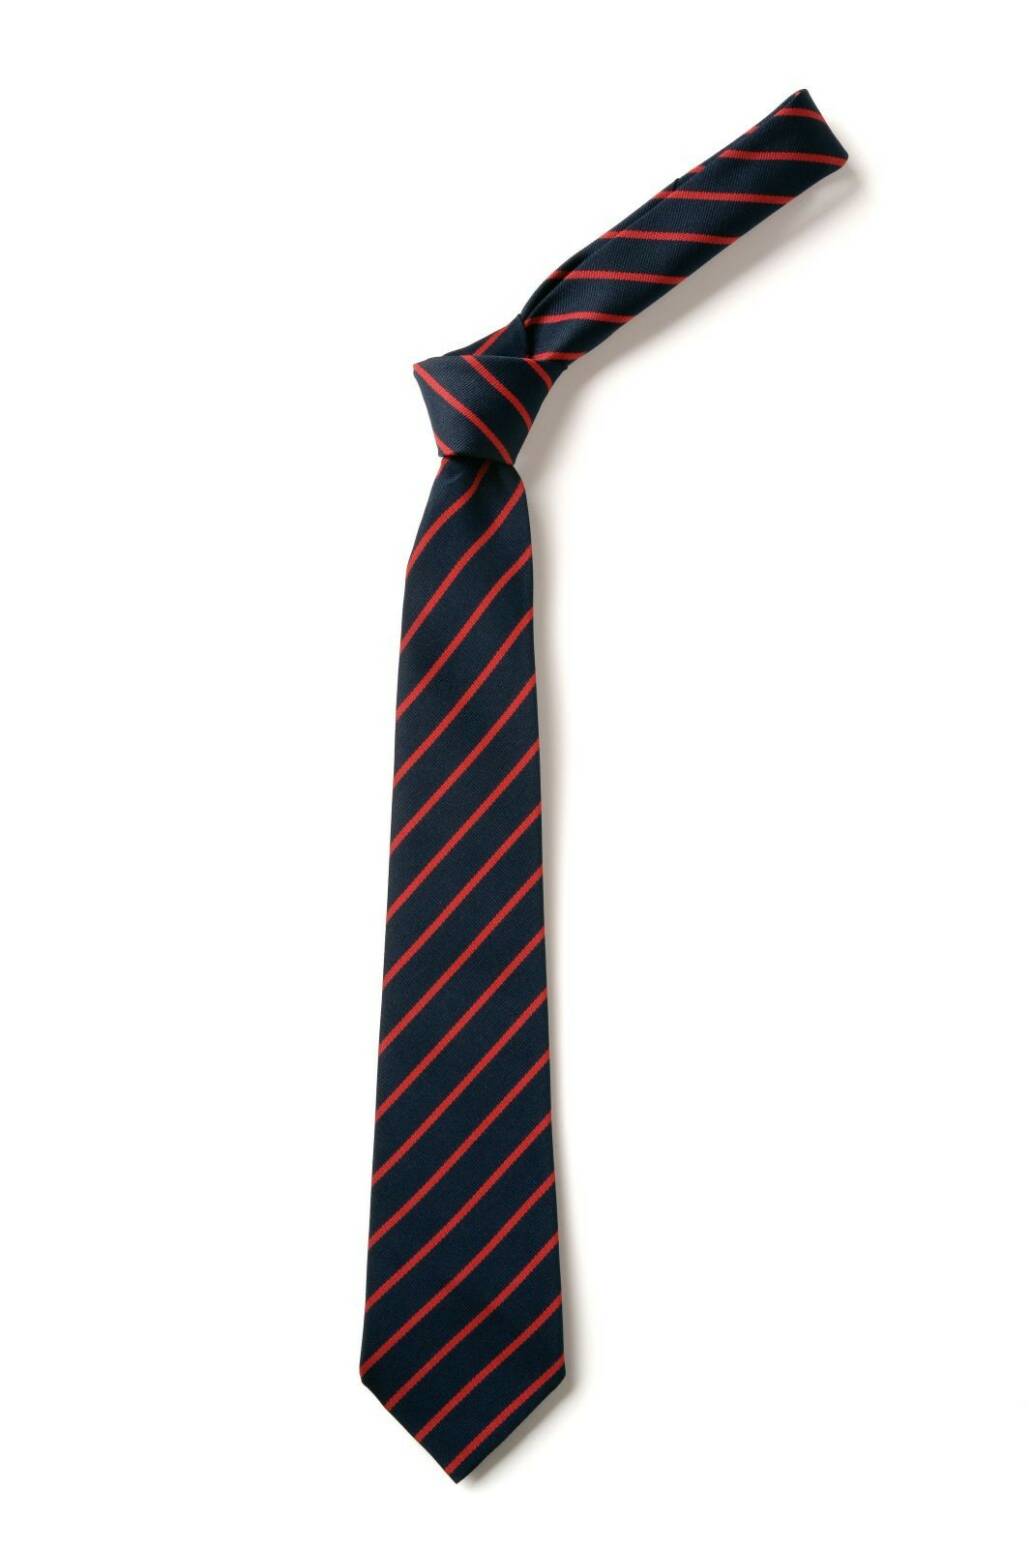 The New School Tie